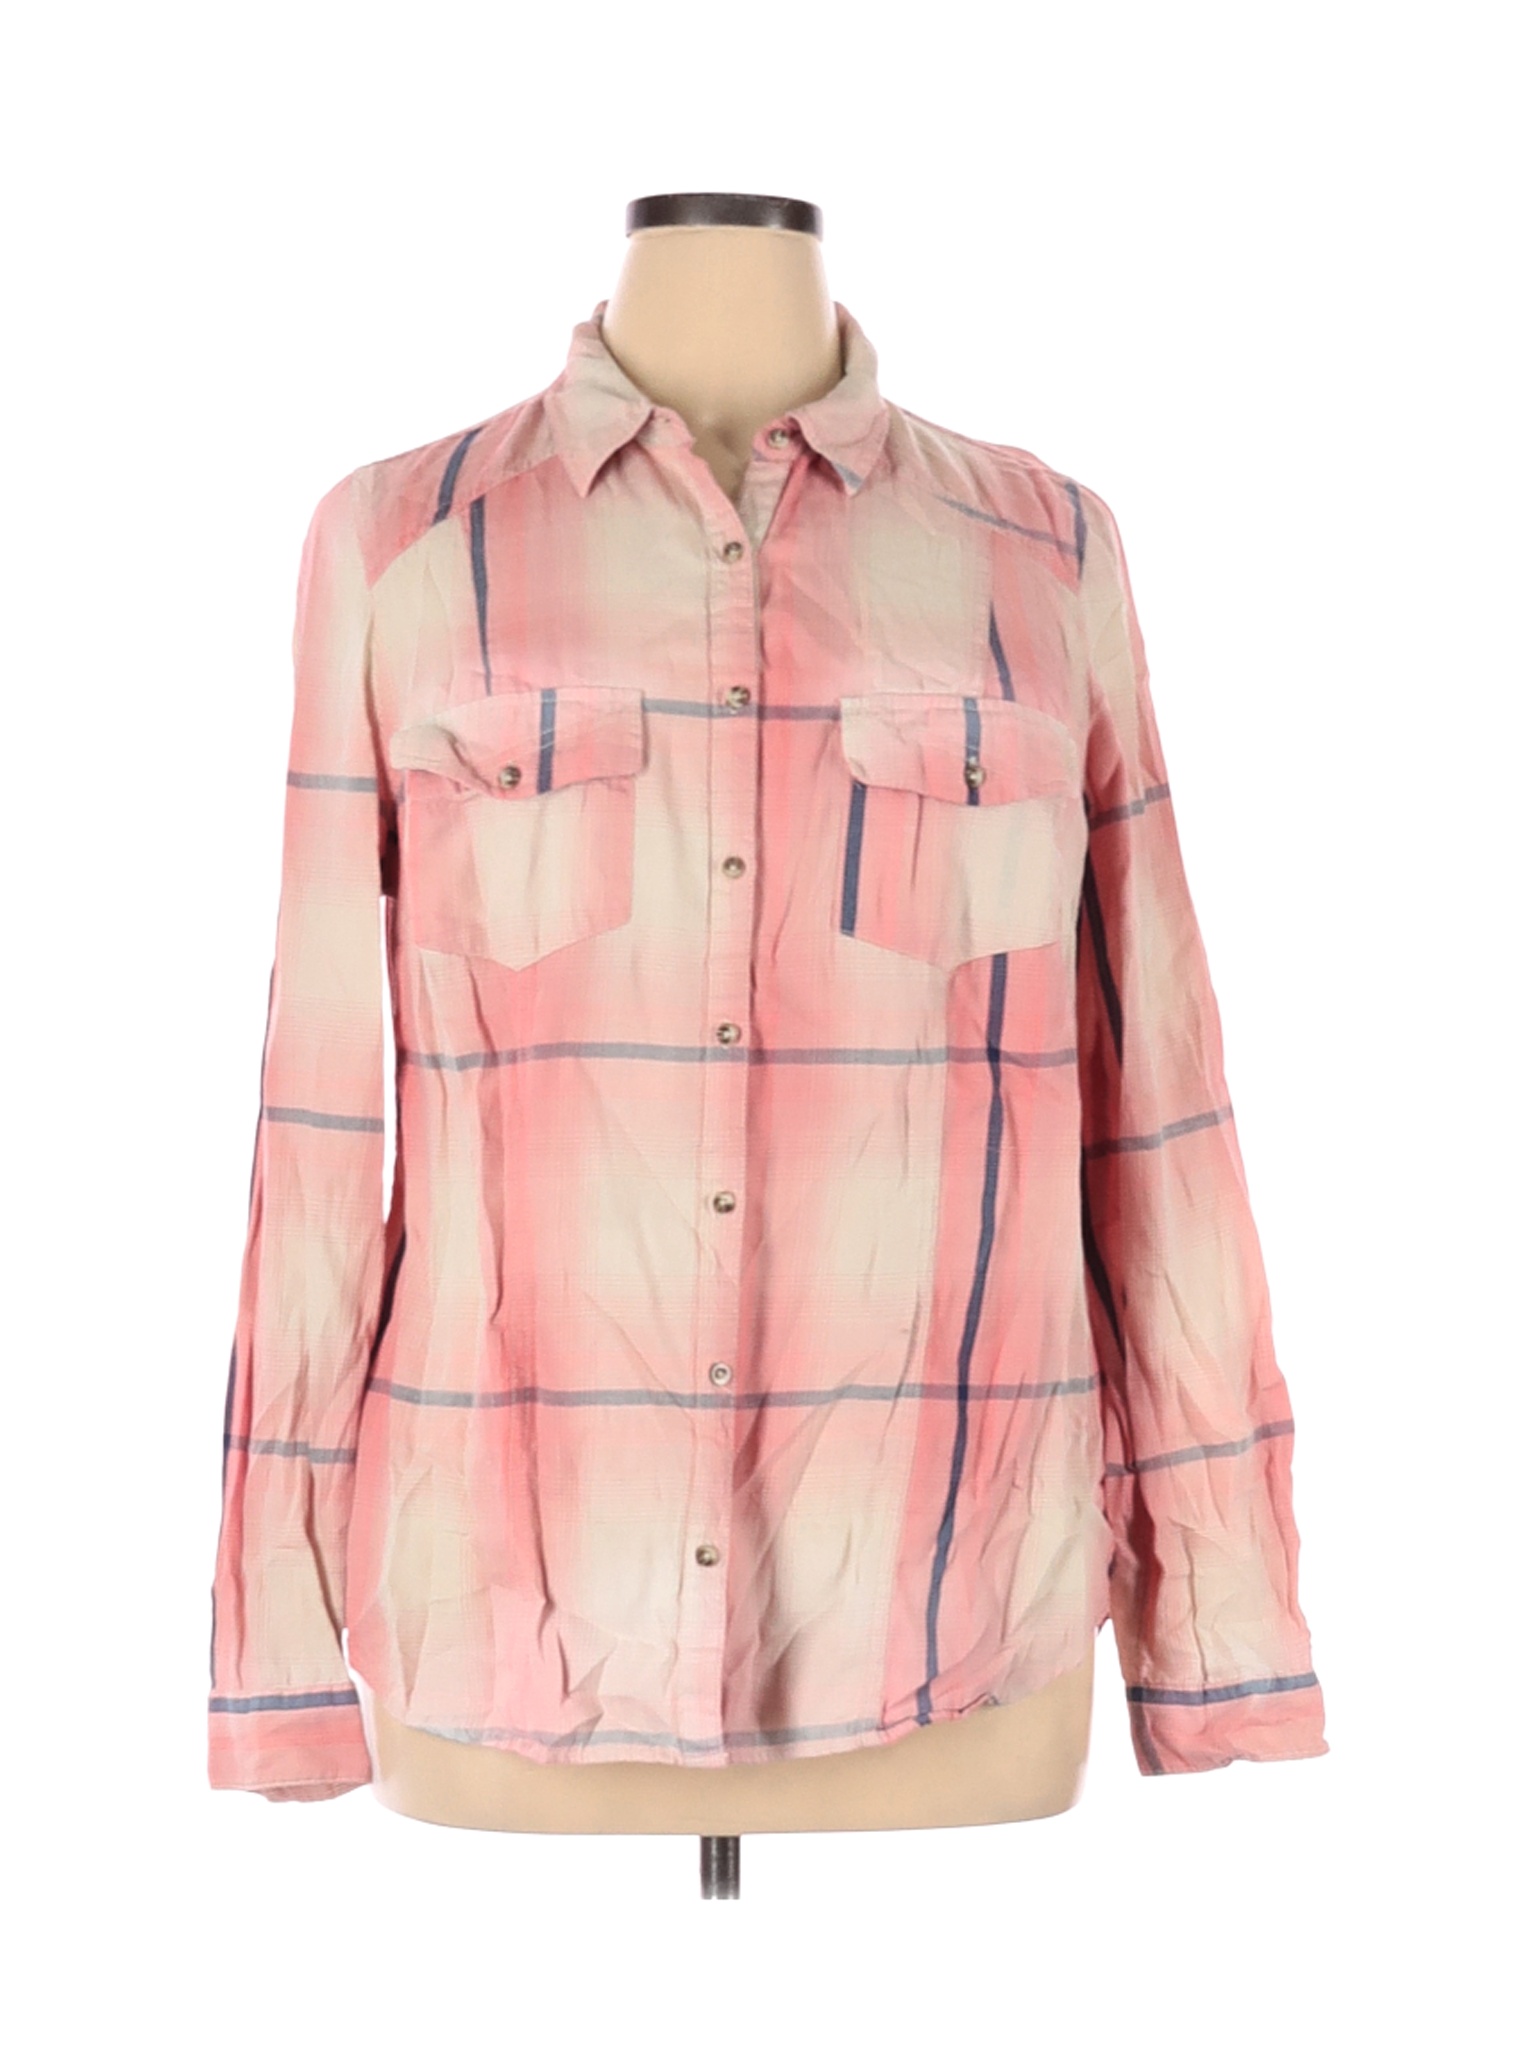 Maurices Women Pink Long Sleeve Button-Down Shirt 16 | eBay